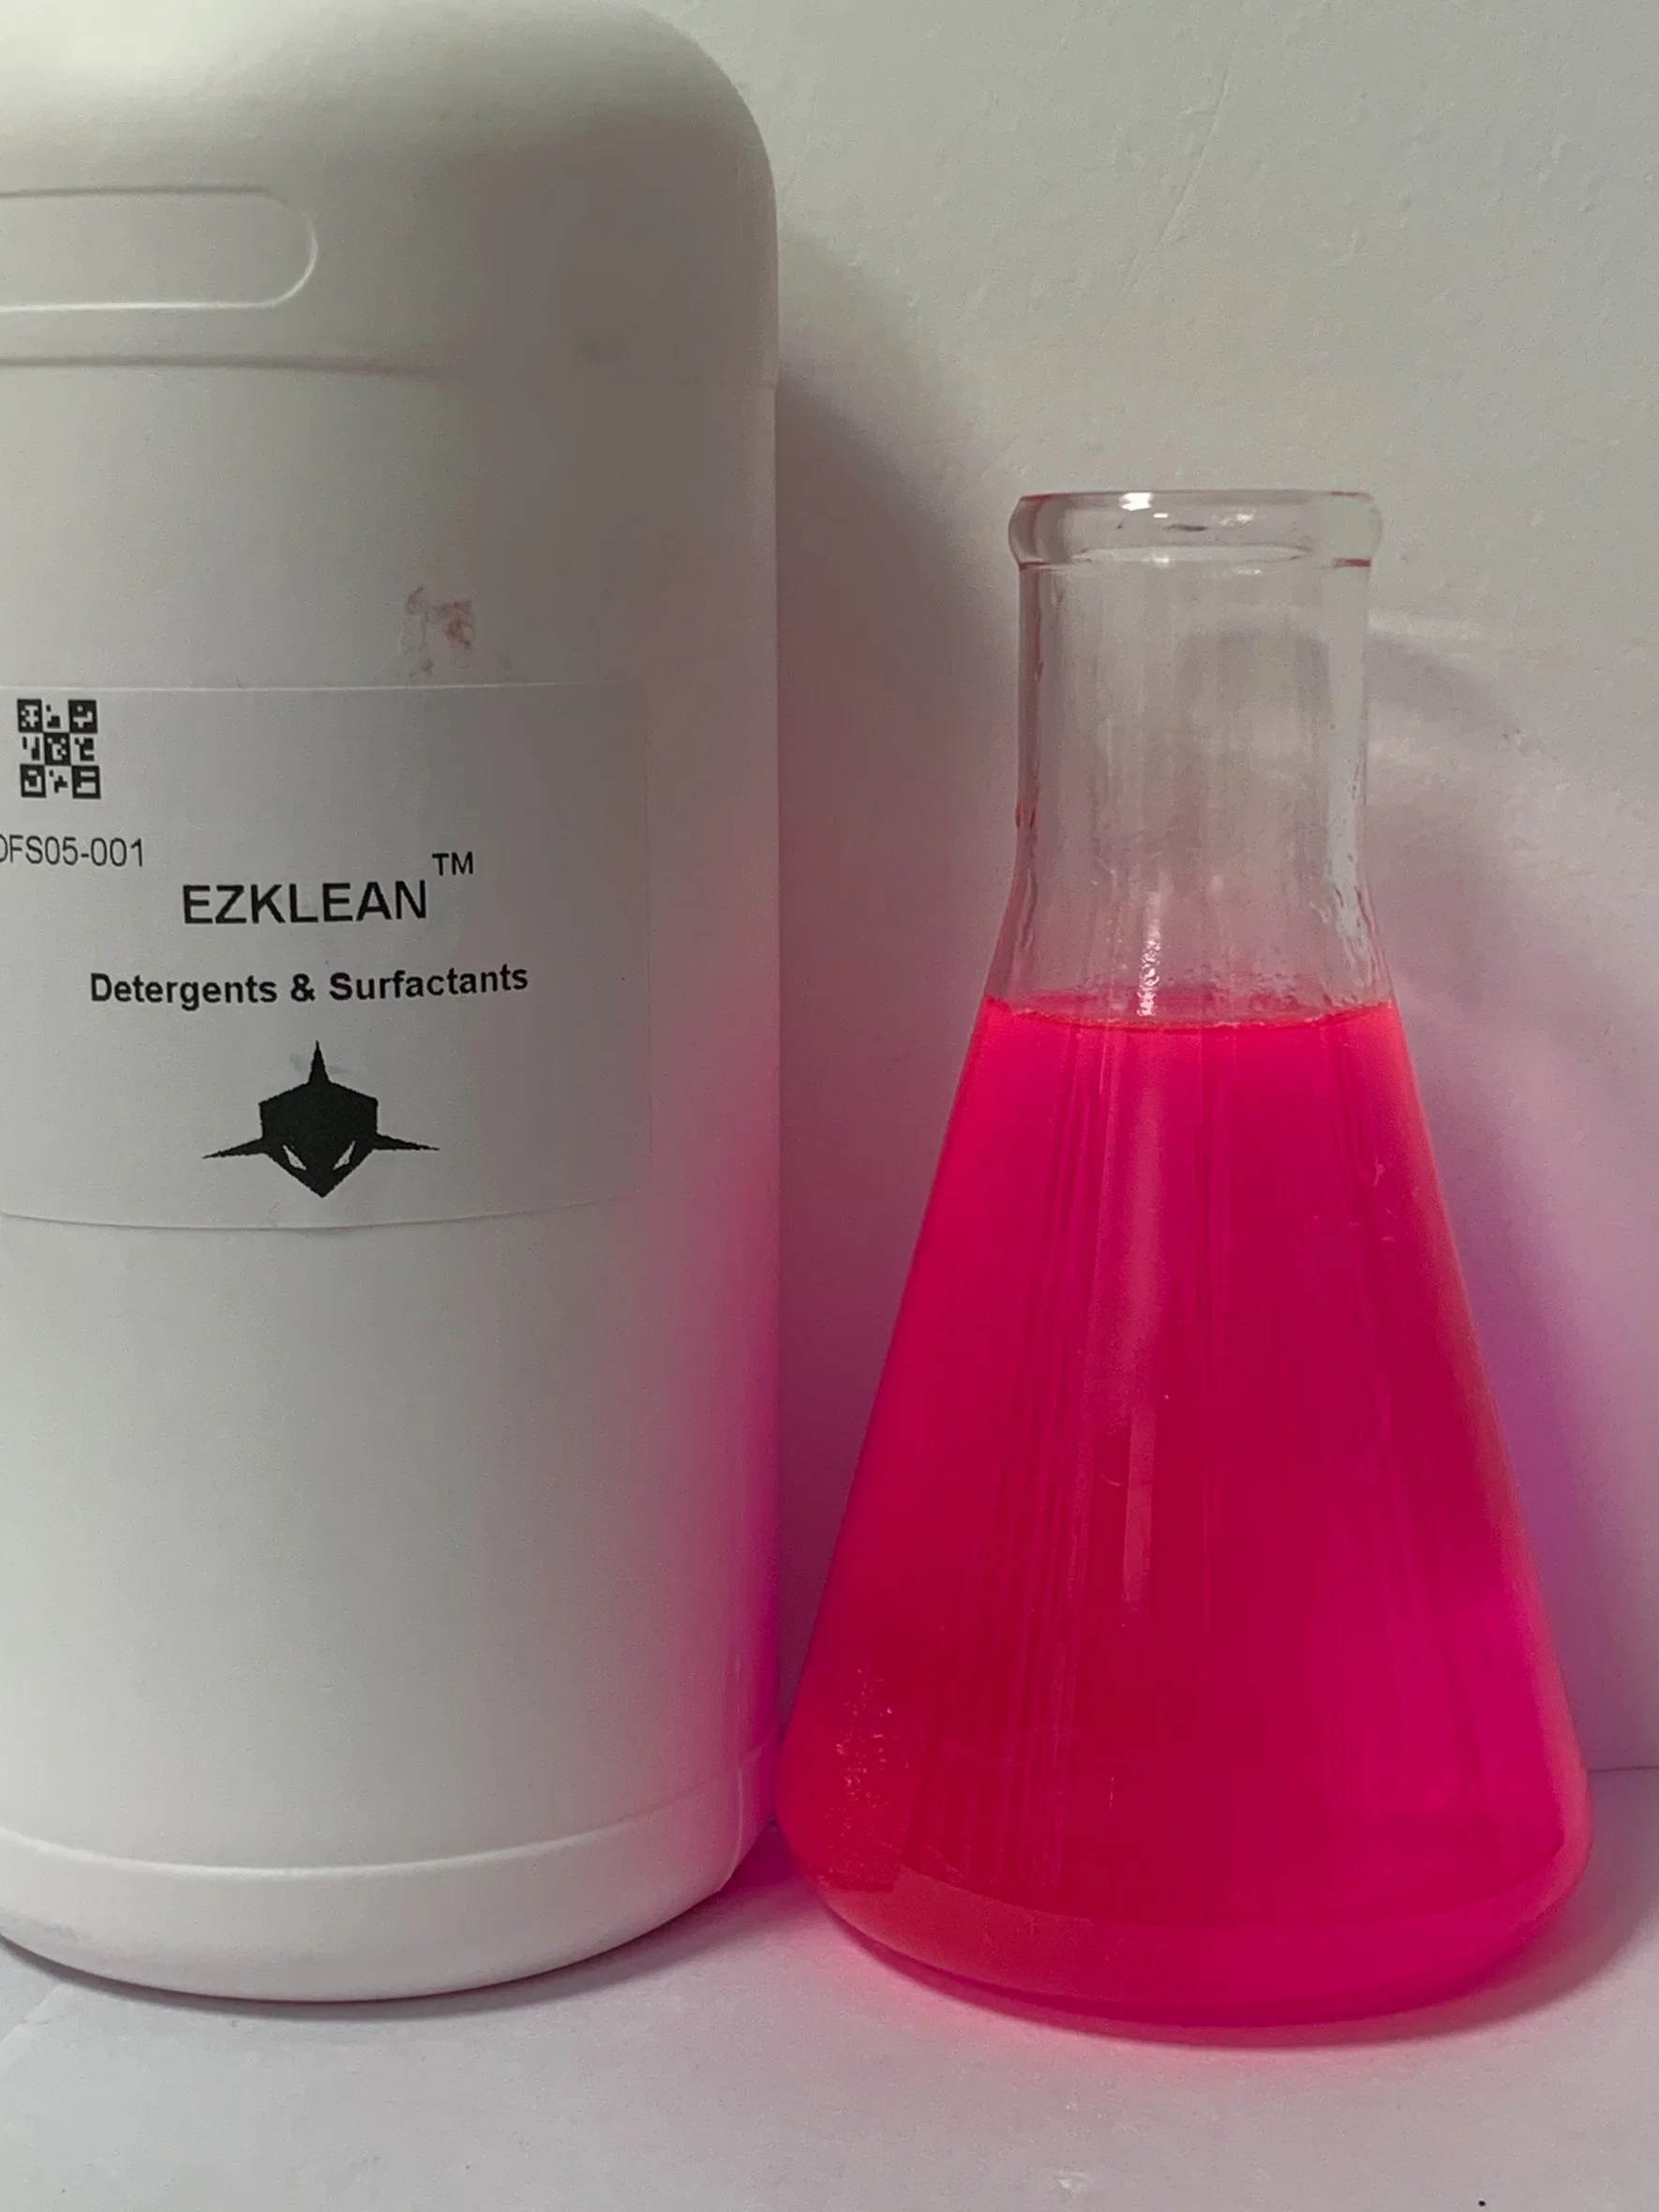 Ezklean Detergents and Surfactants Products